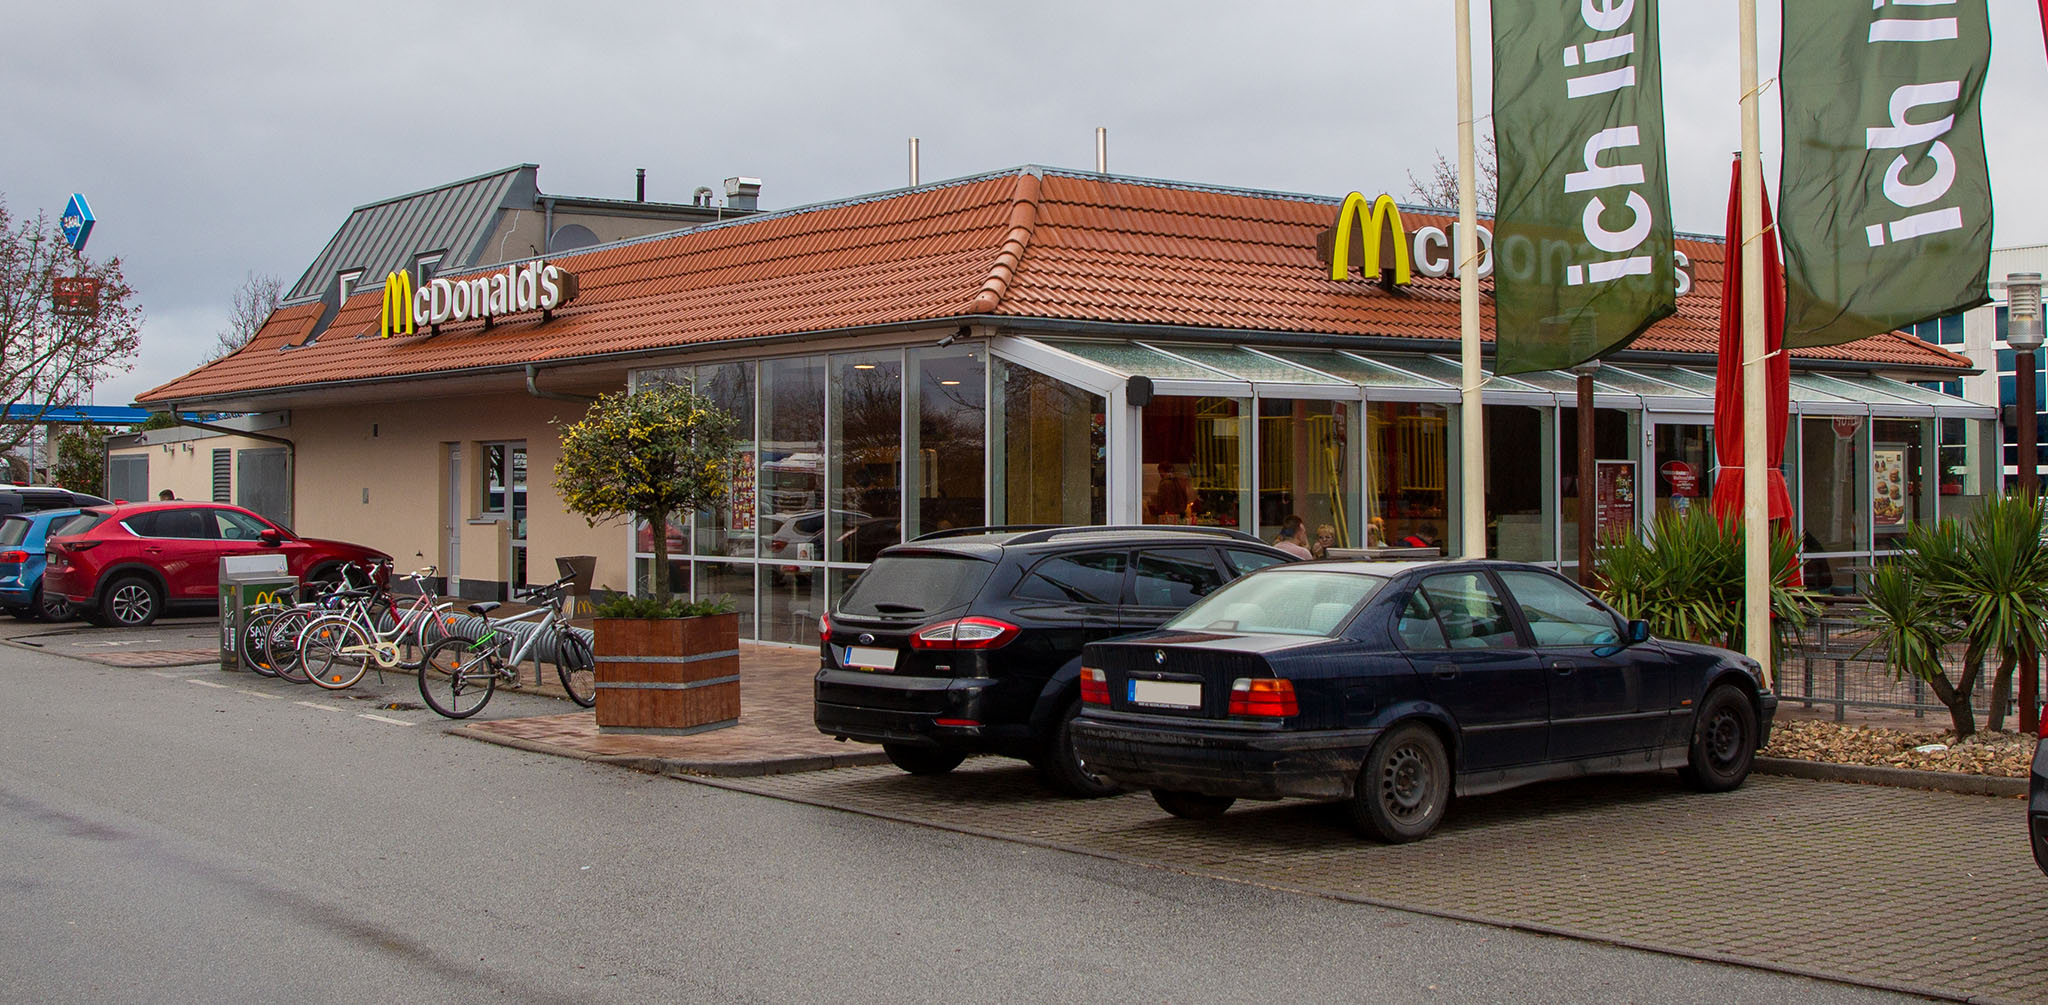 Das McDonald’s-Restaurant in Bensheim